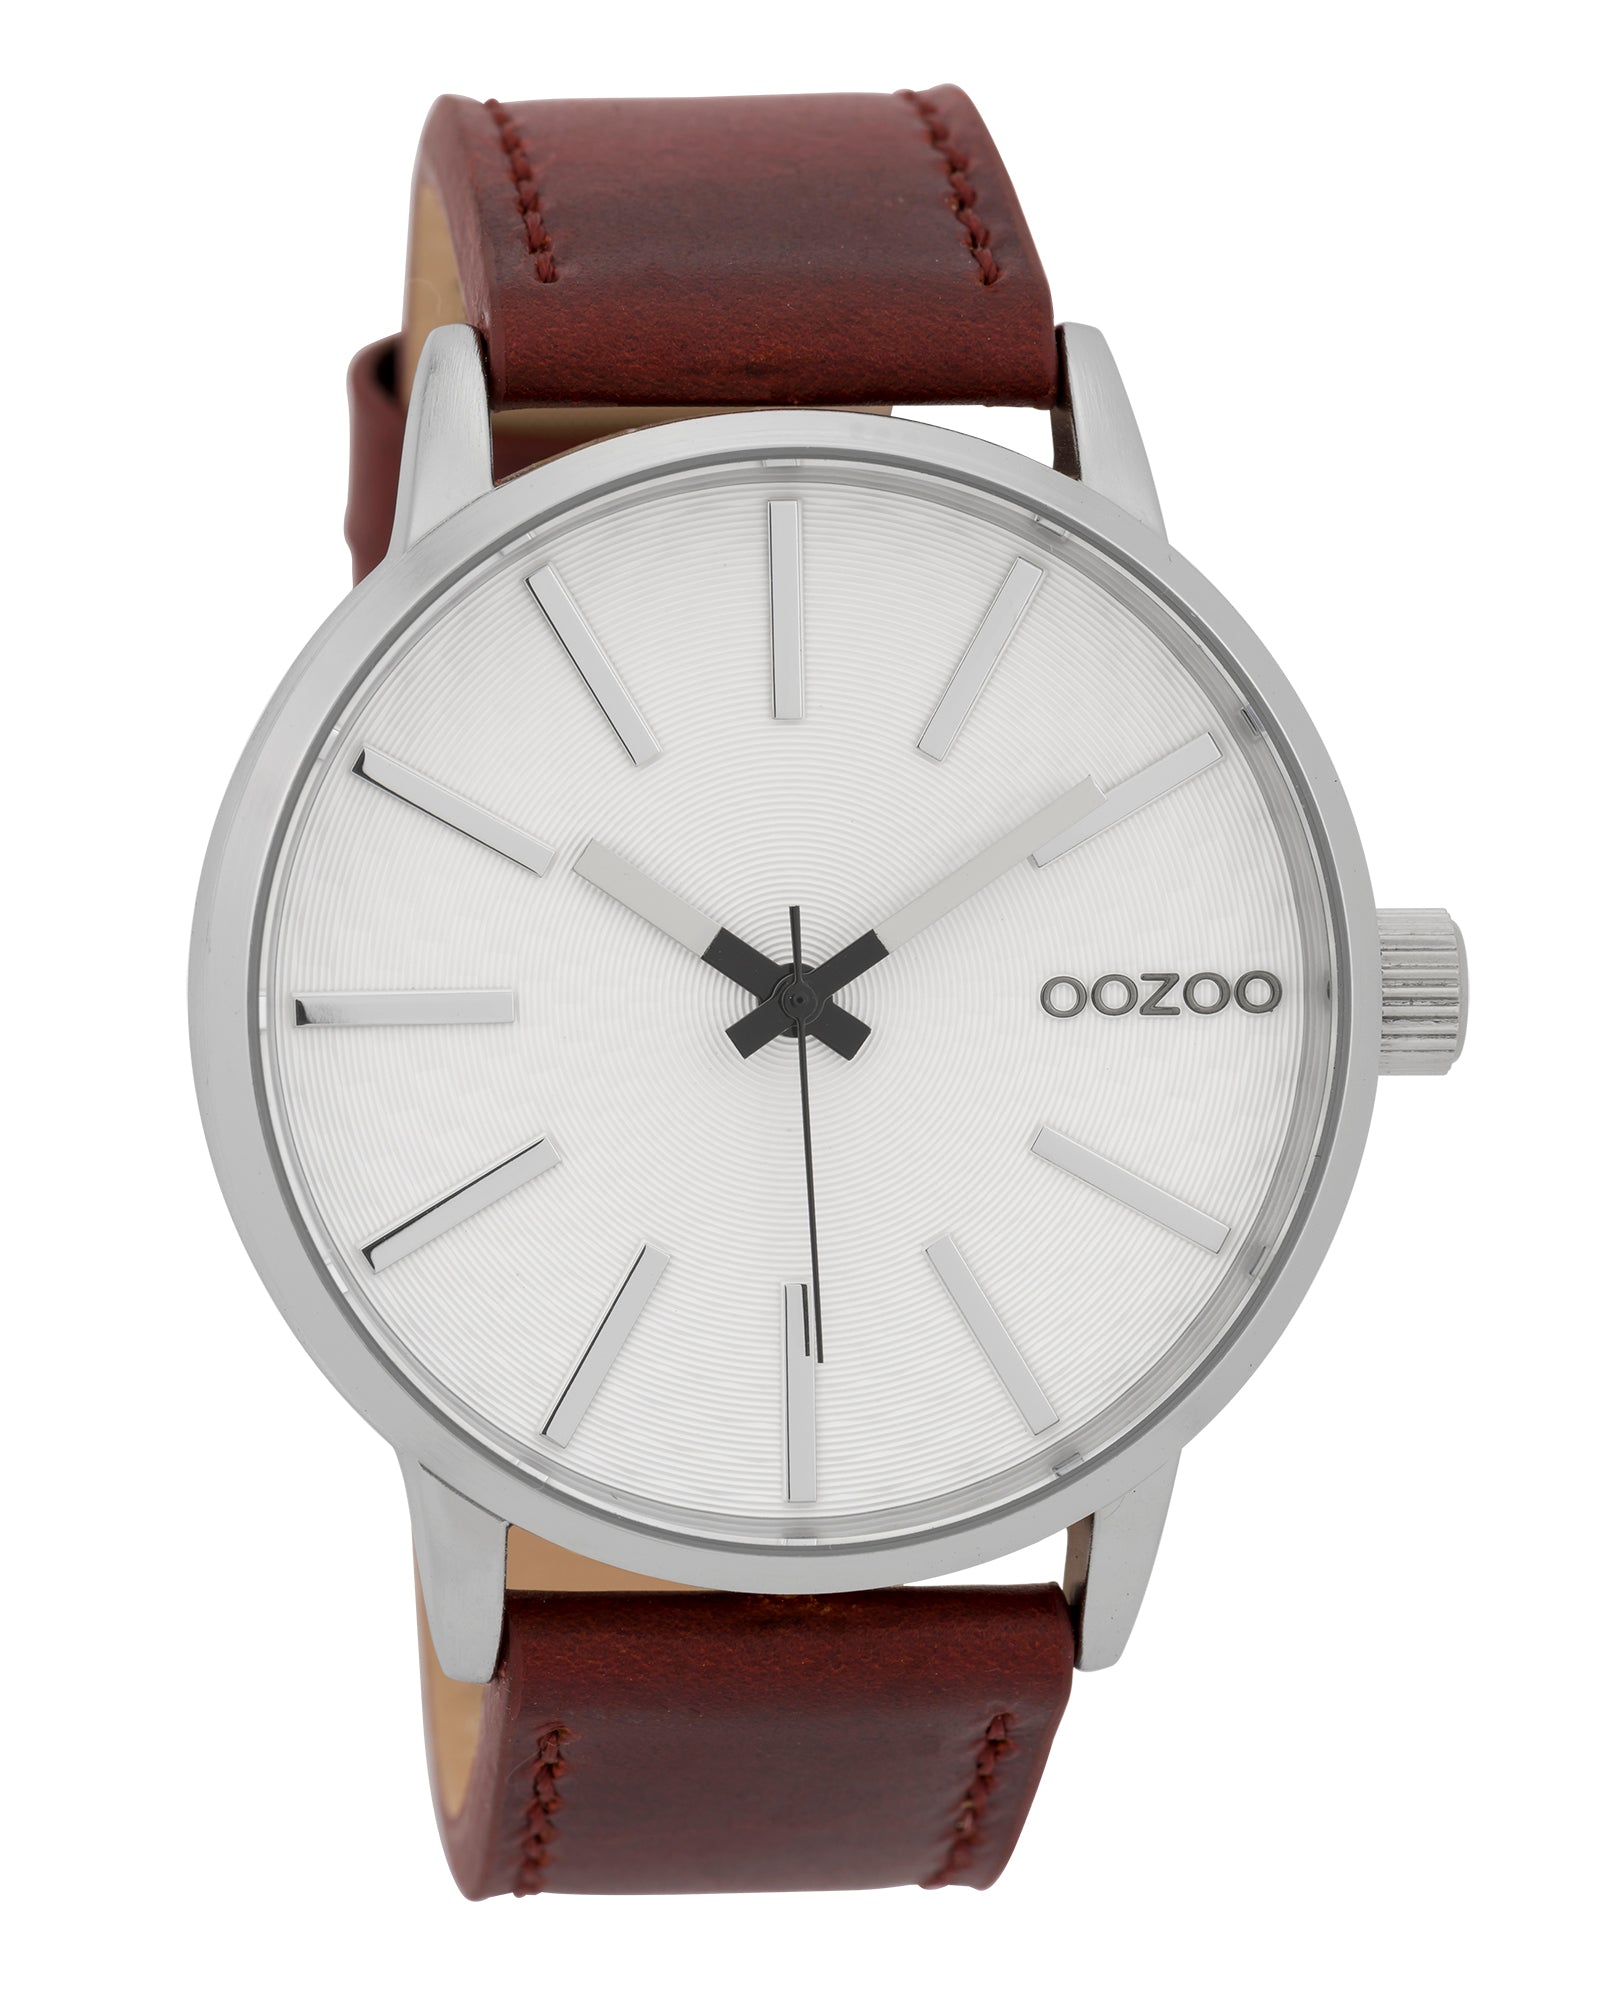 OOZOO 45mm Brown Leather Watch